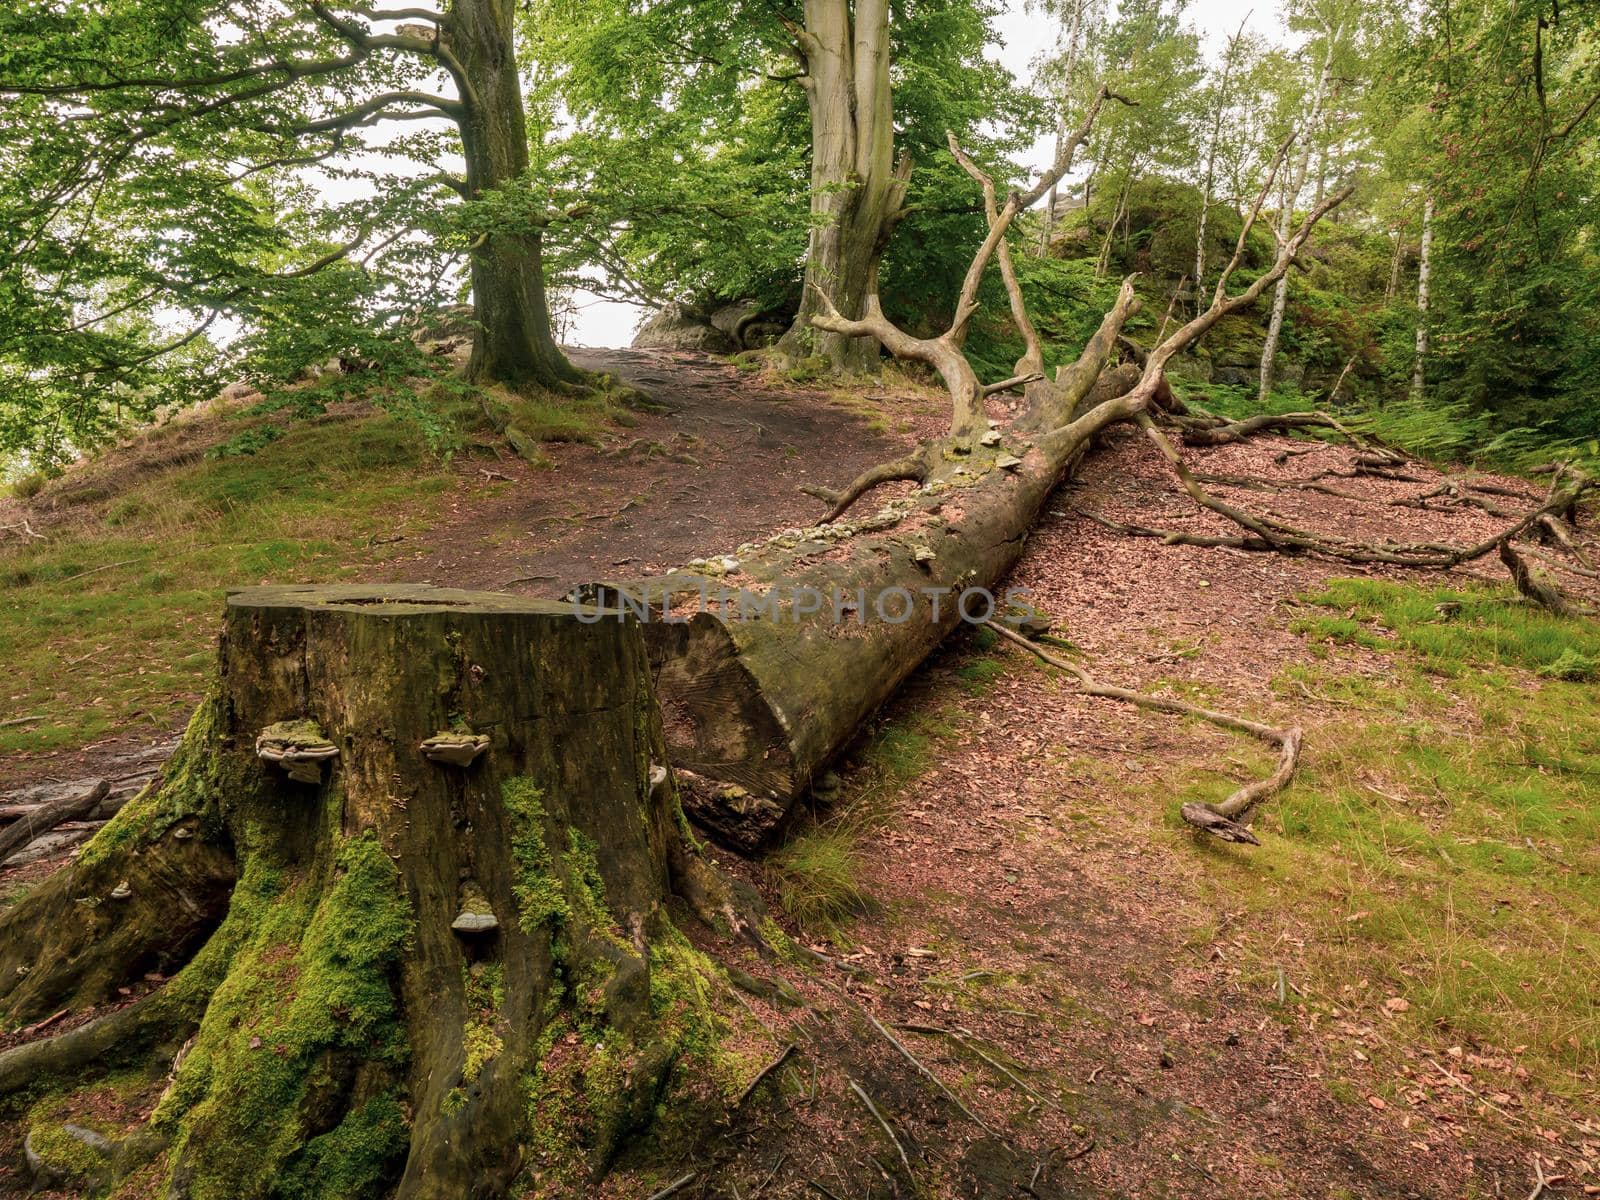 Fallen historical beech tree. Big beech tree cut down in the forest  by rdonar2